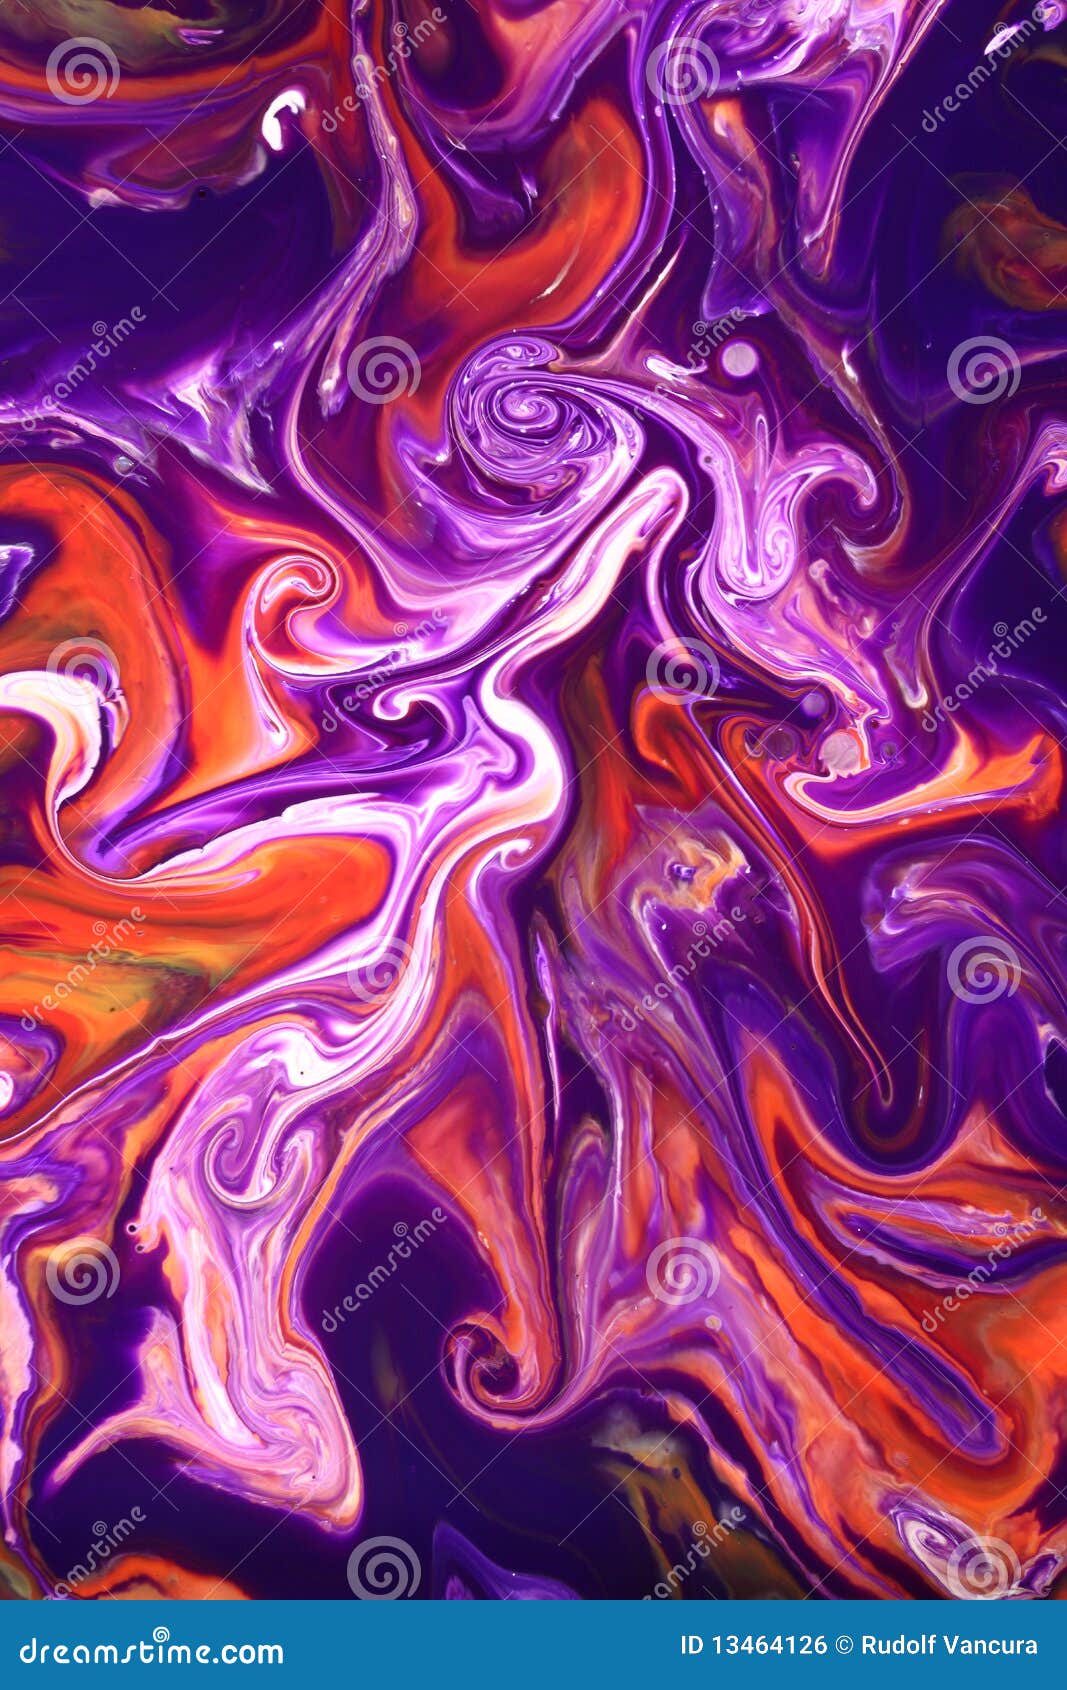 swirling paints